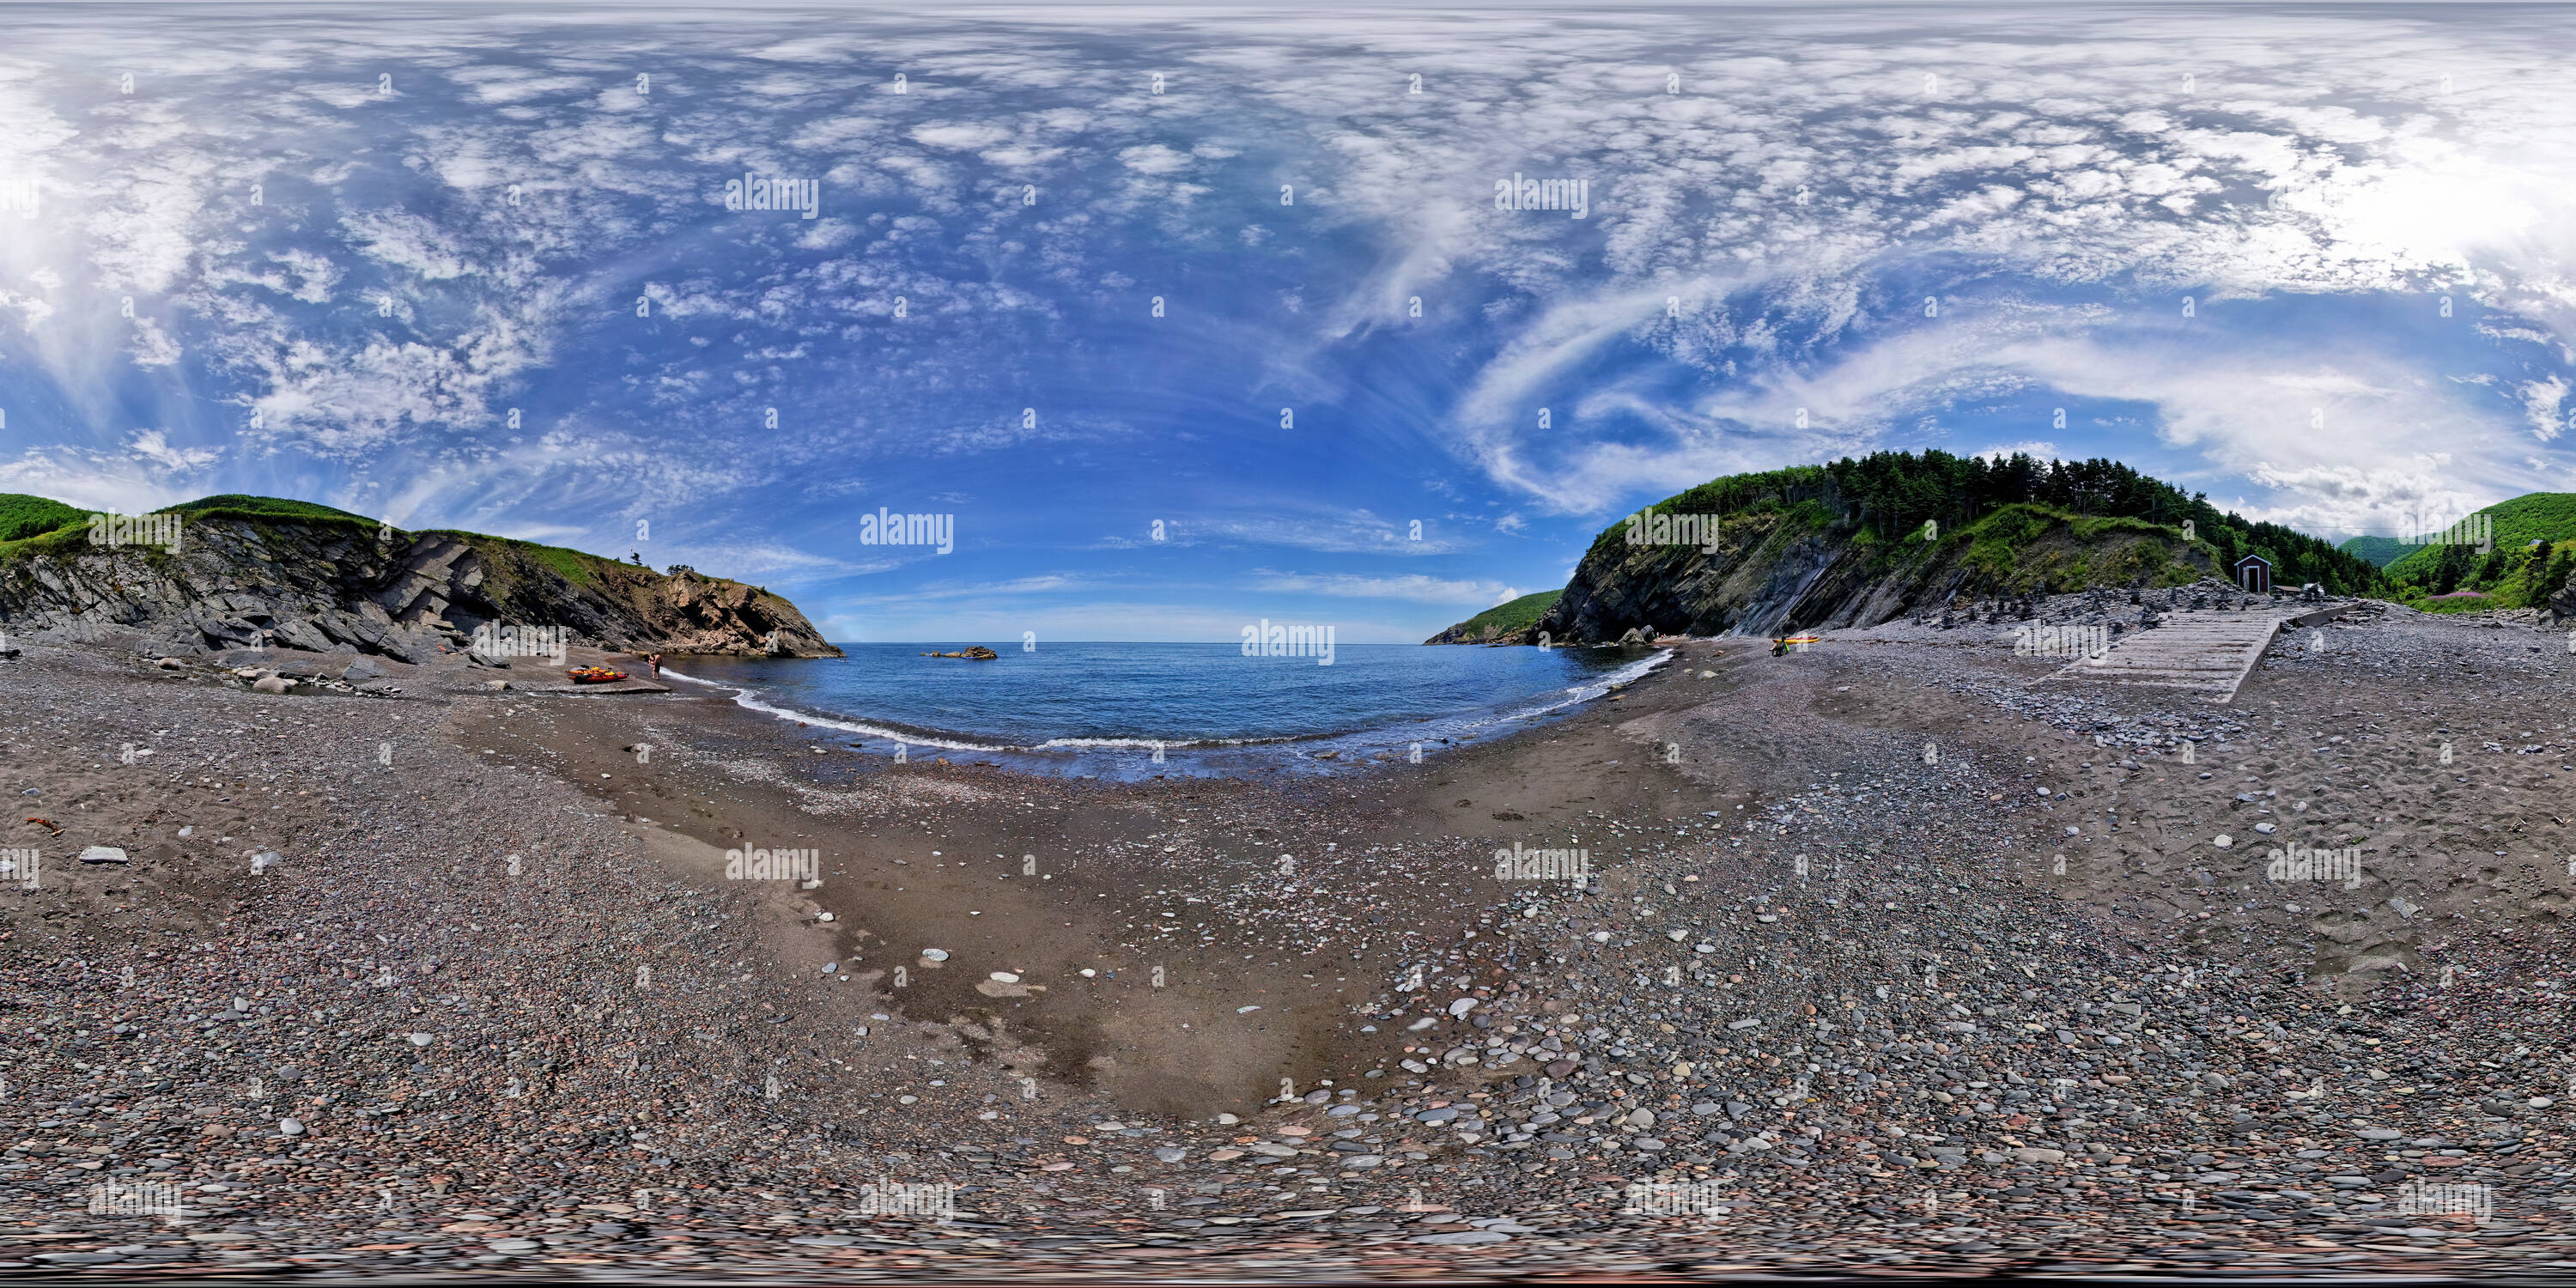 360 Grad Panorama Ansicht von Fleisch Cove, Cape Breton Island, Nova Scotia.